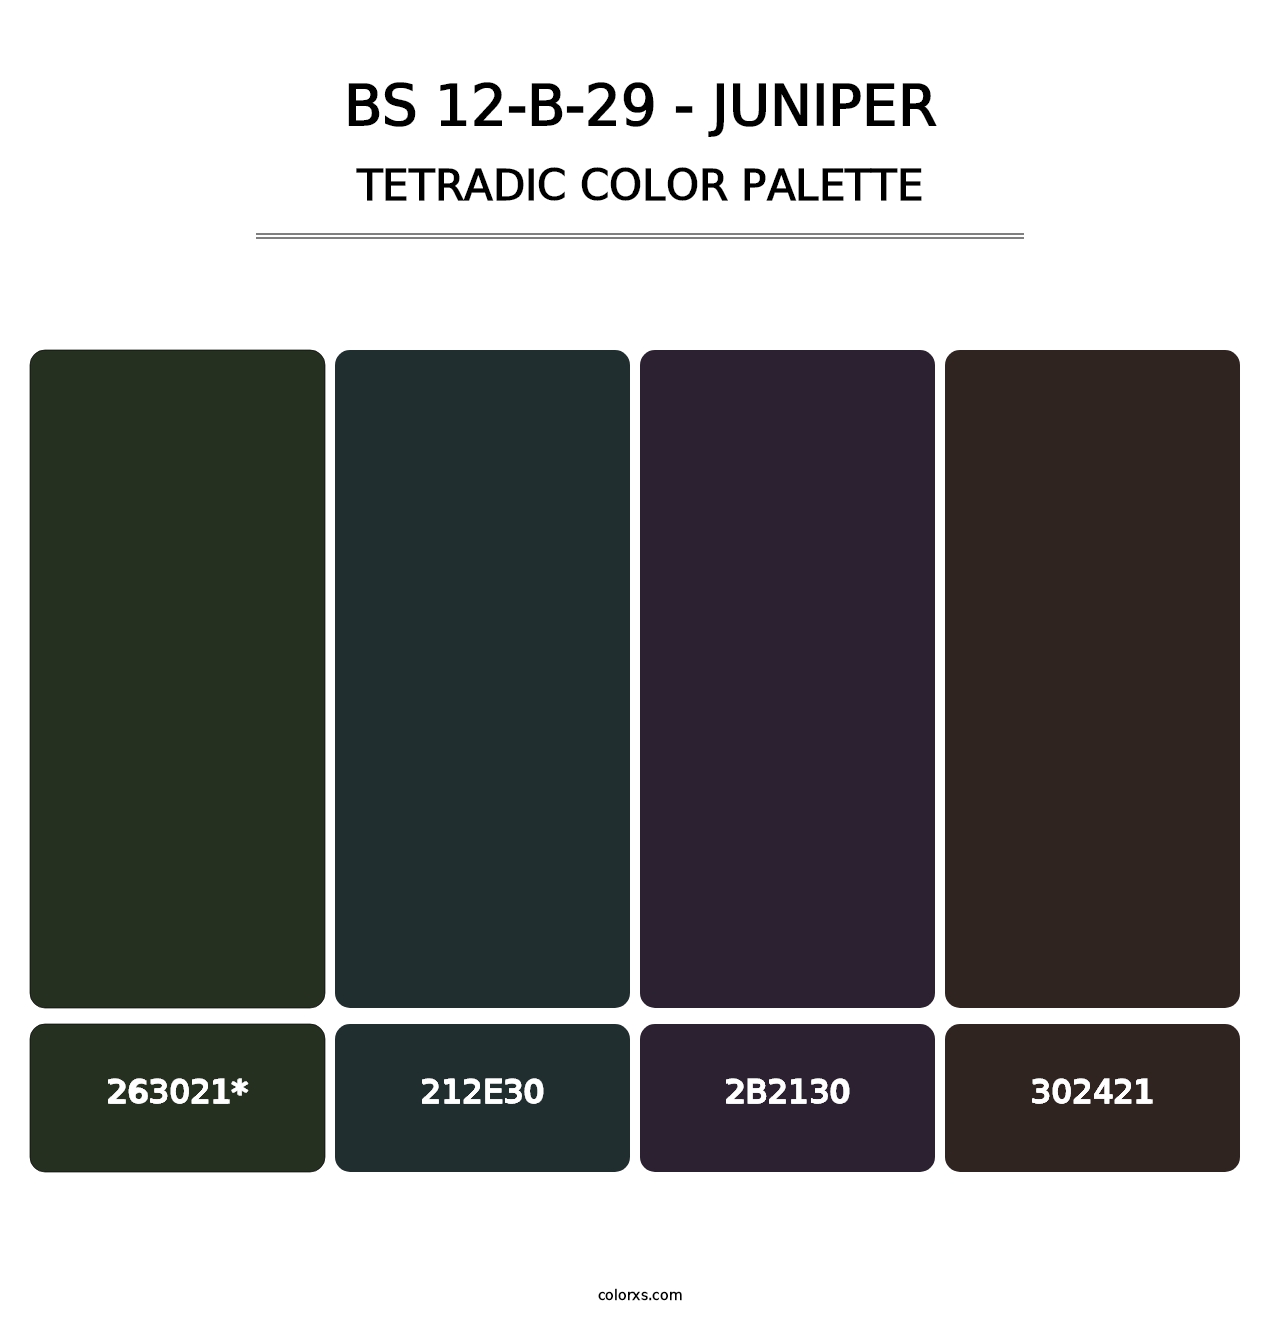 BS 12-B-29 - Juniper - Tetradic Color Palette